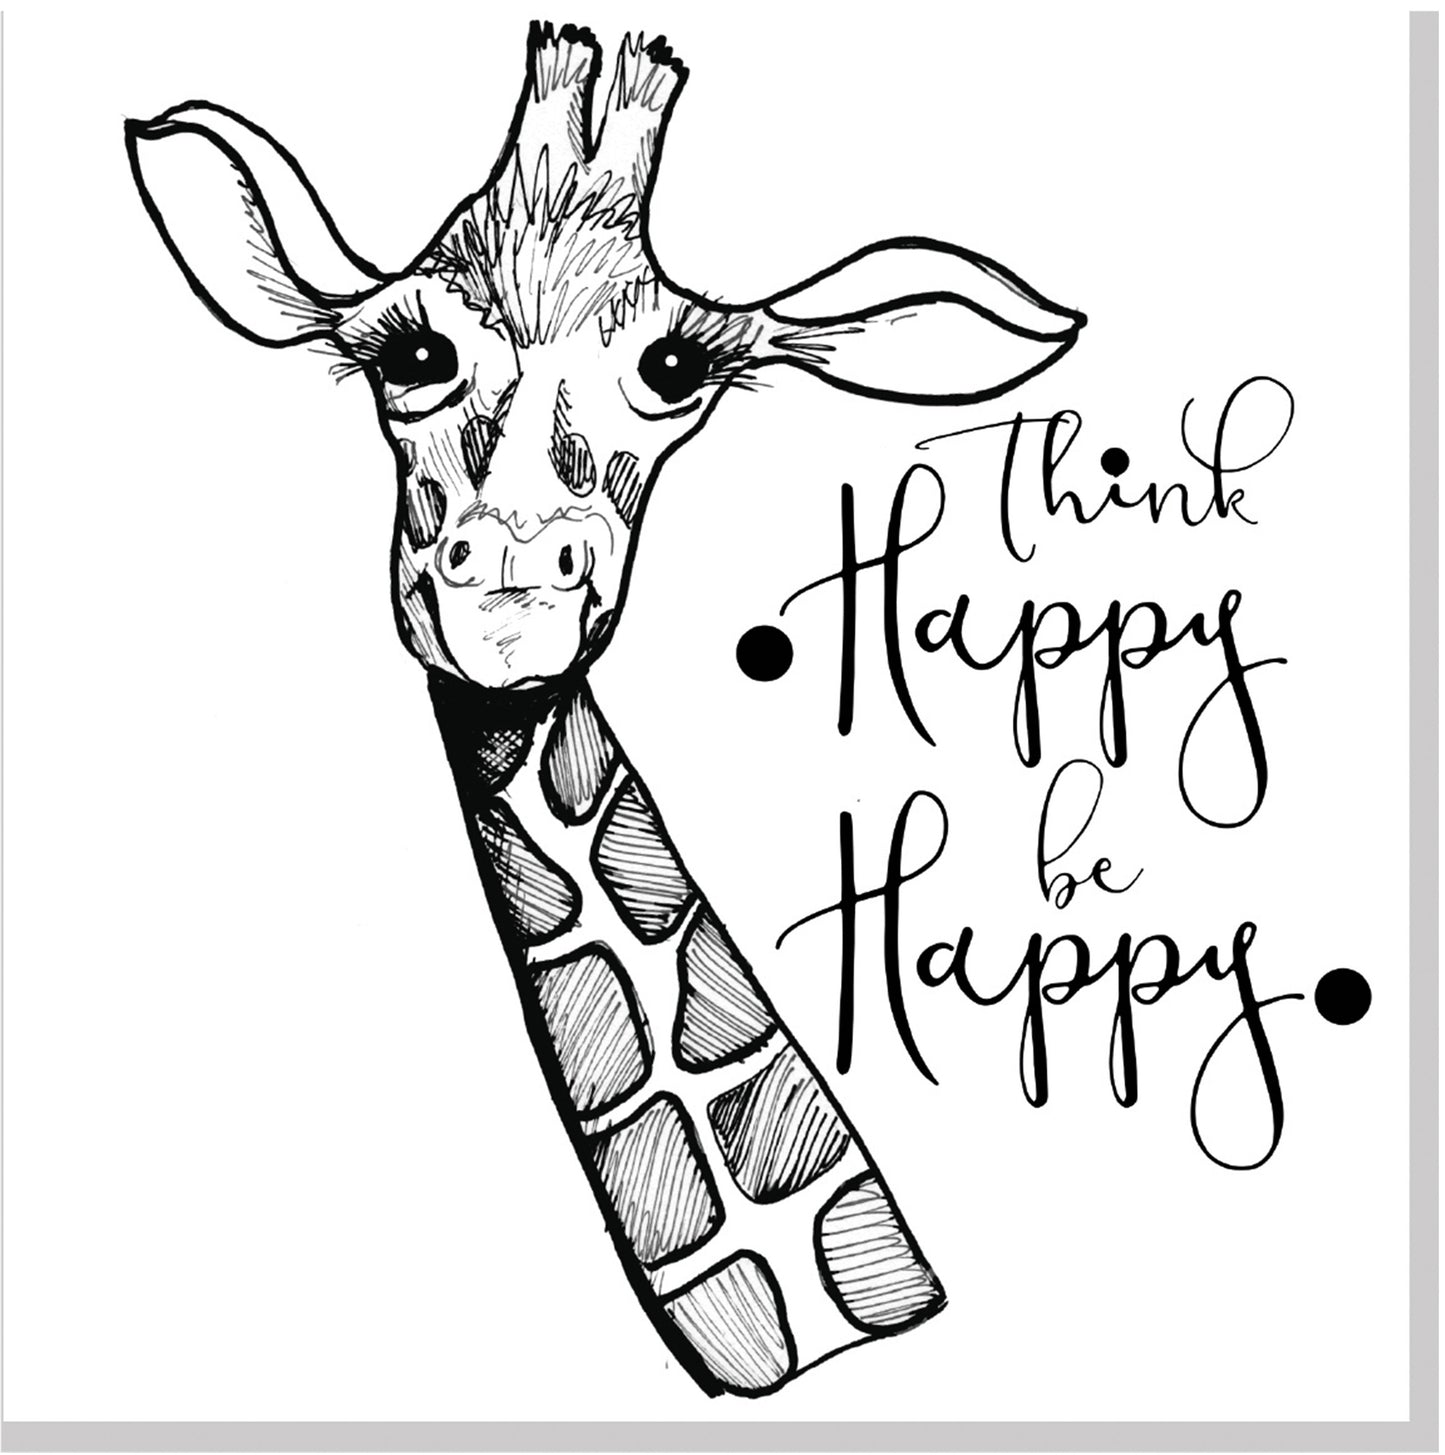 Think happy giraffe square card